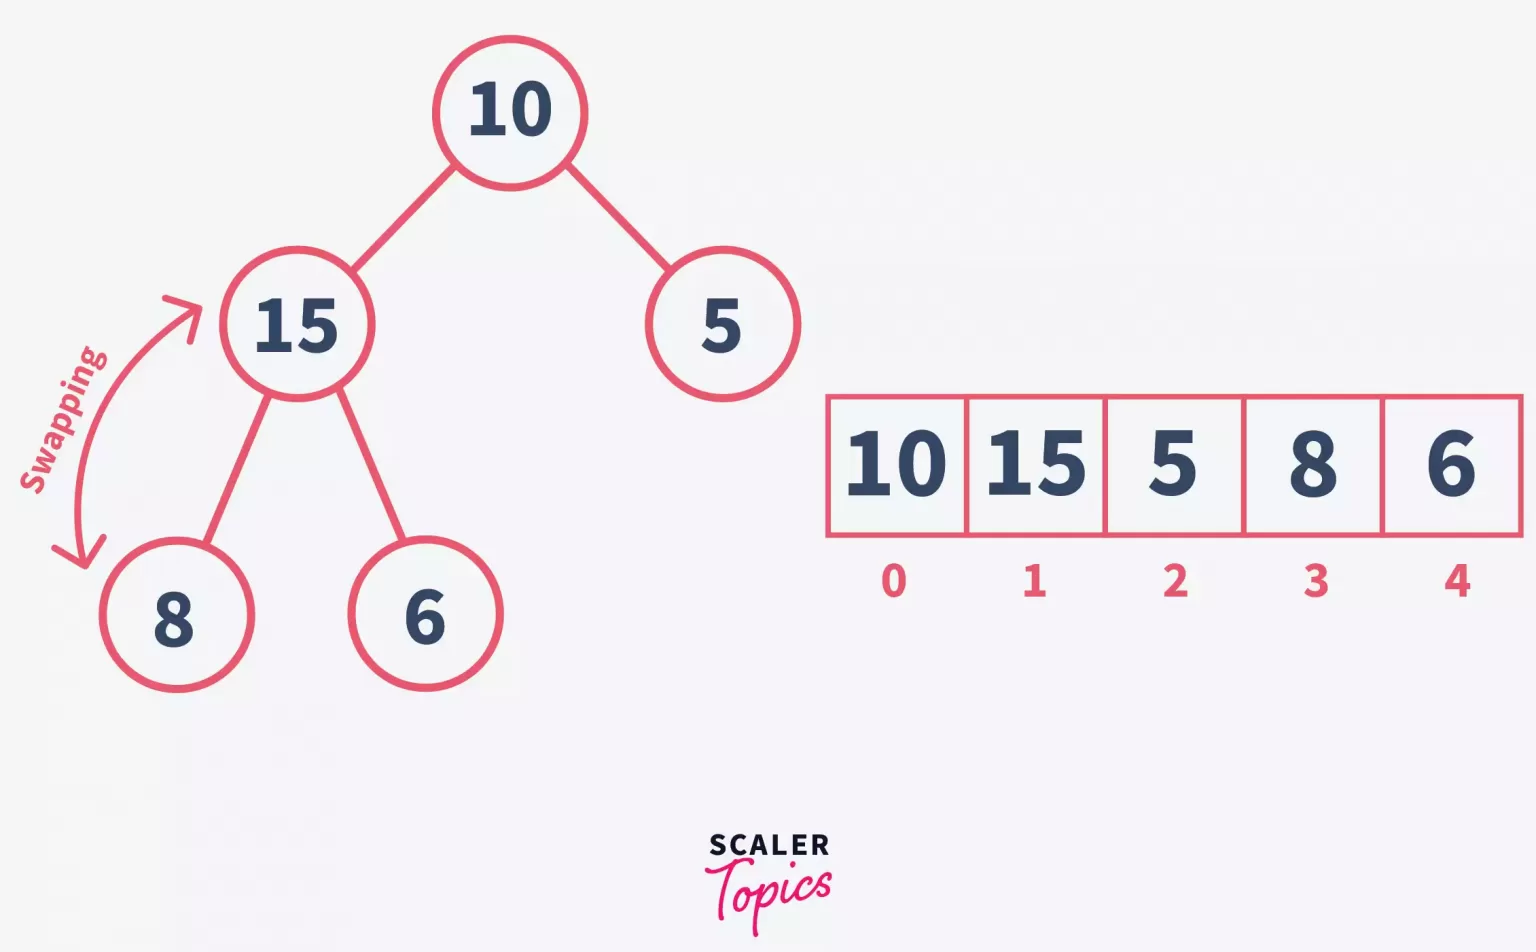 Swapping binary tree